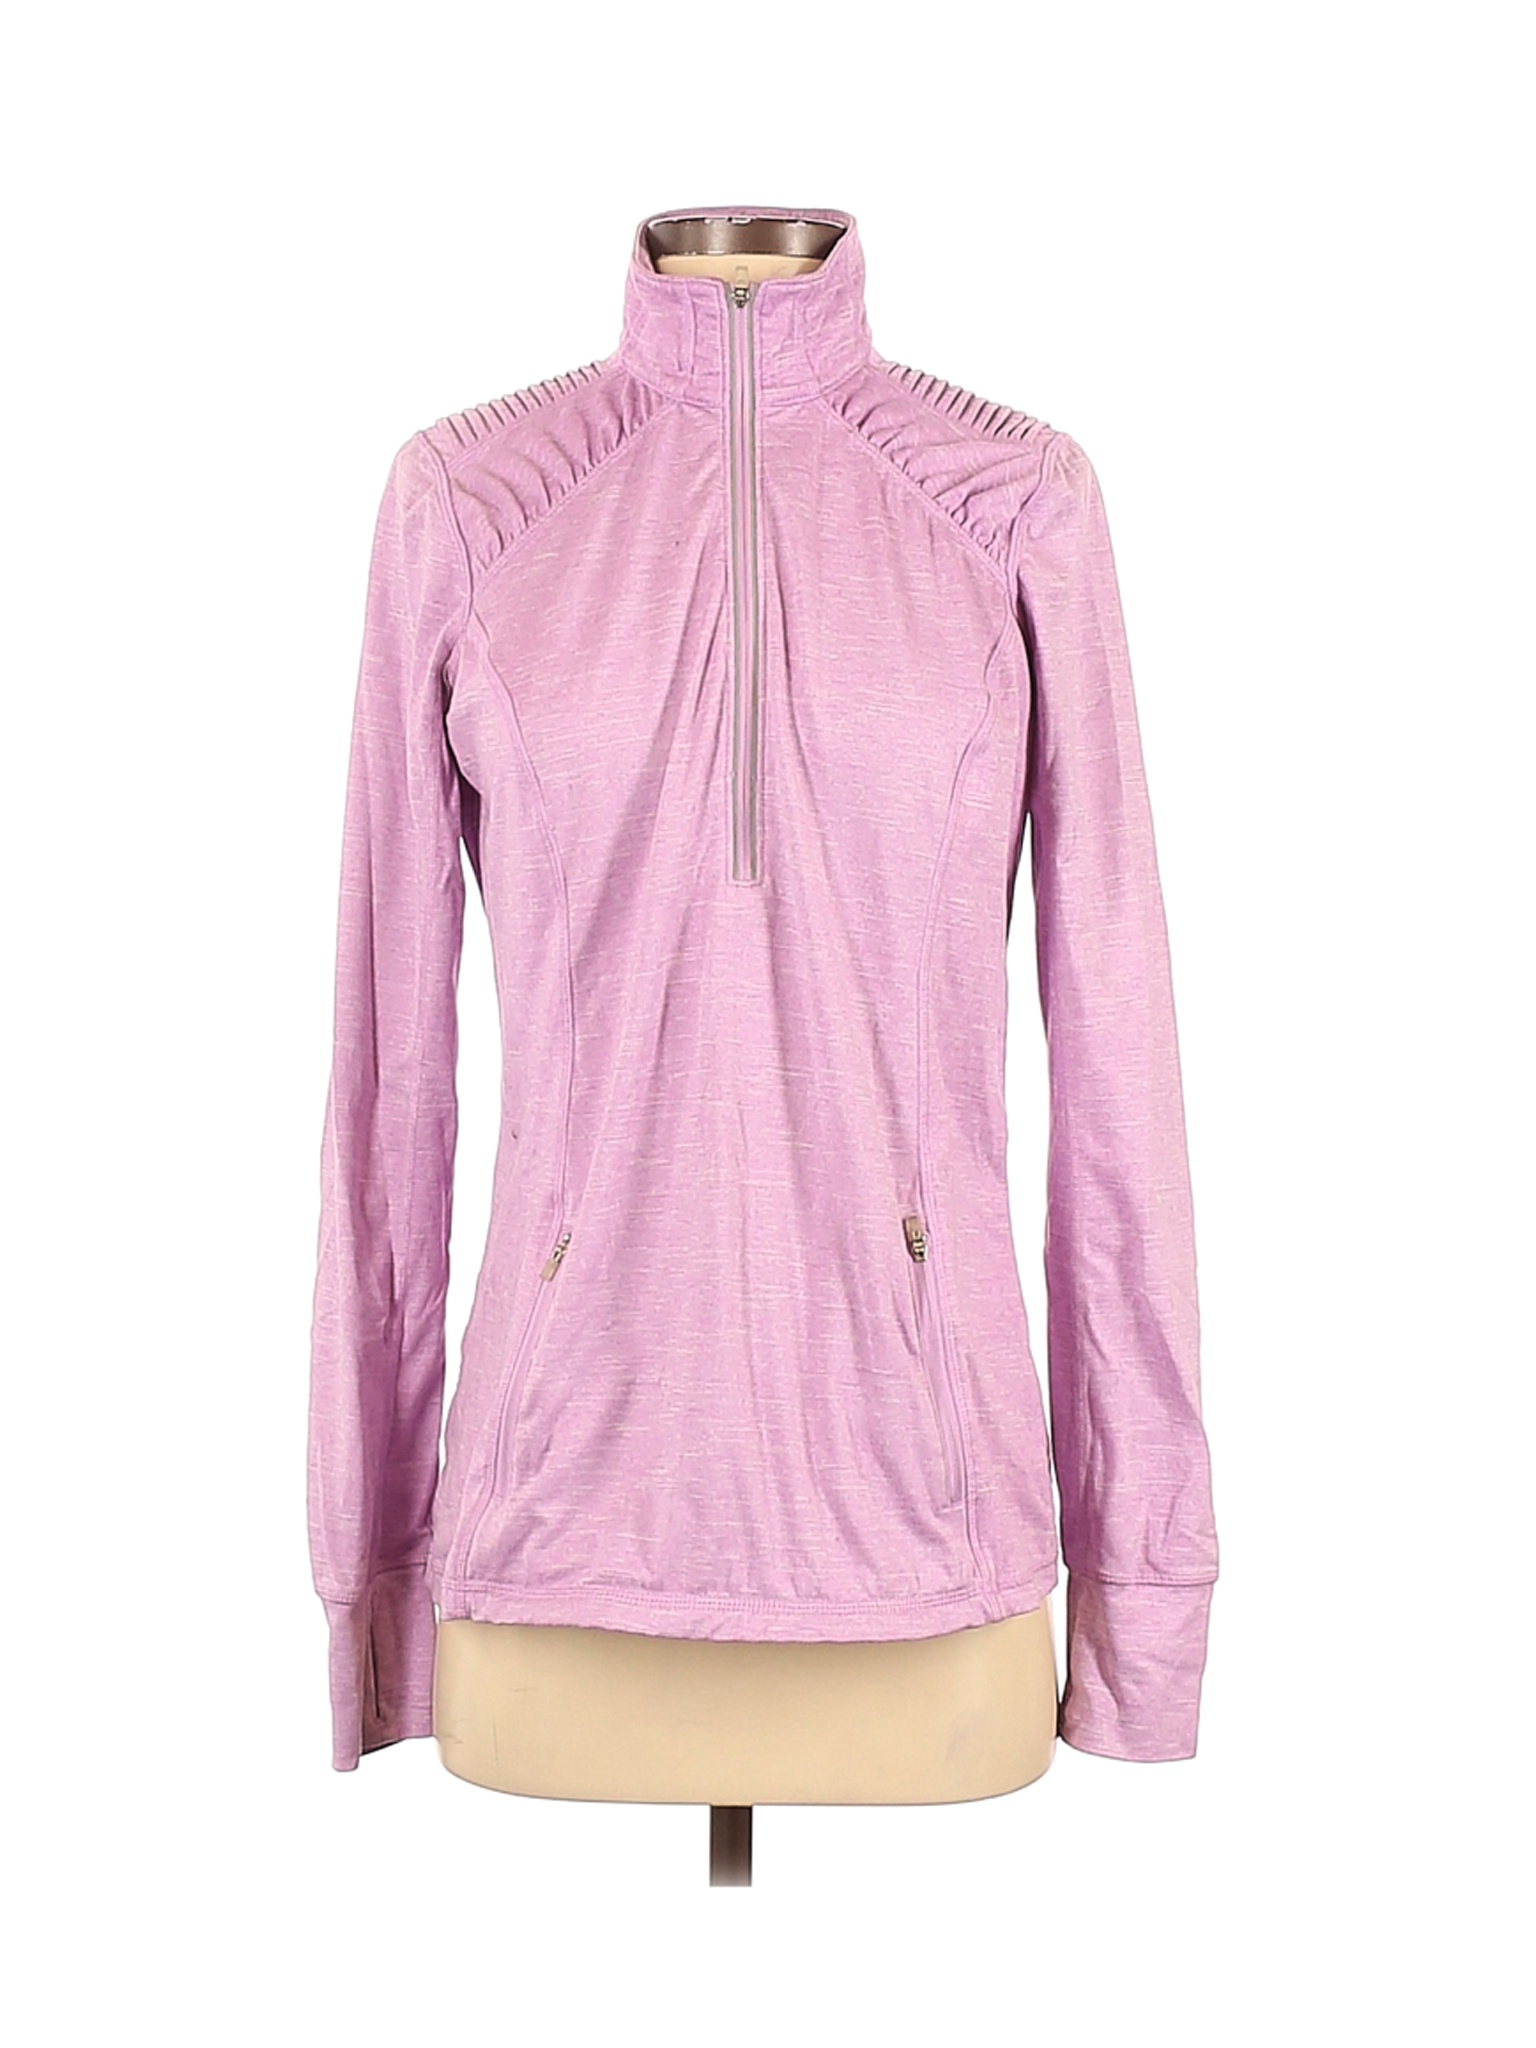 Xersion Women Pink Track Jacket S | eBay